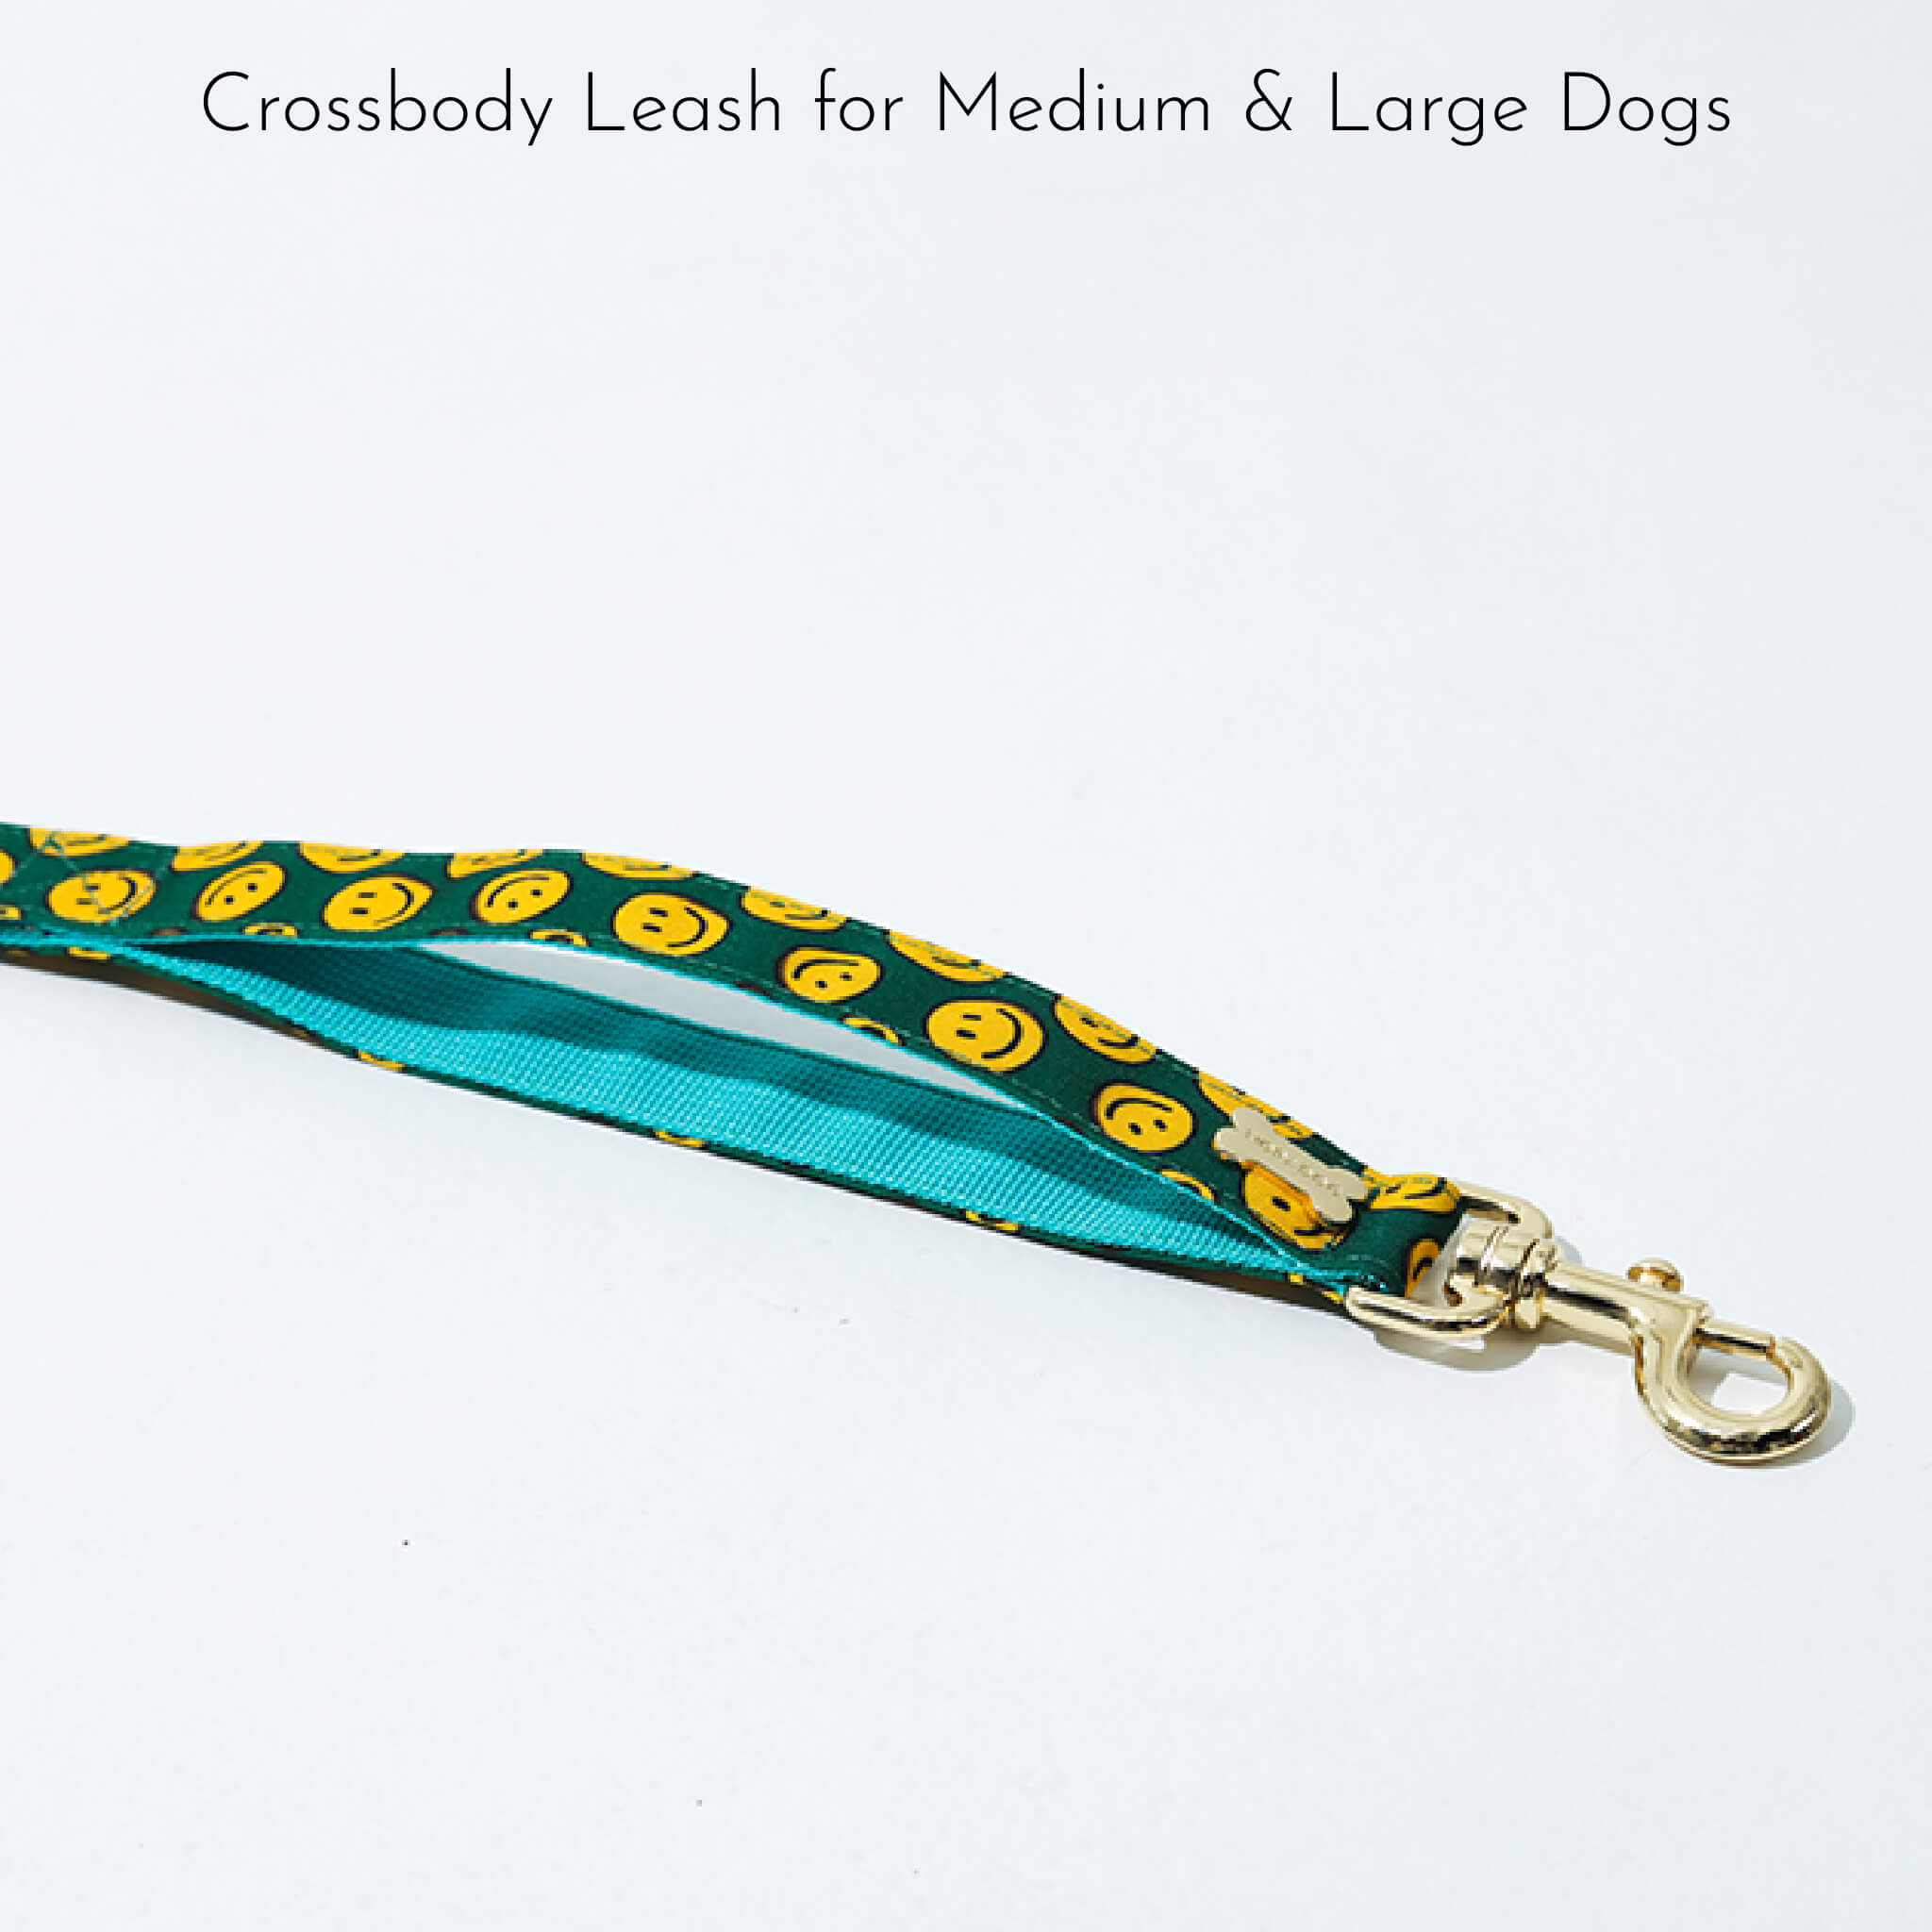 crossbody leash for medium & large dogs